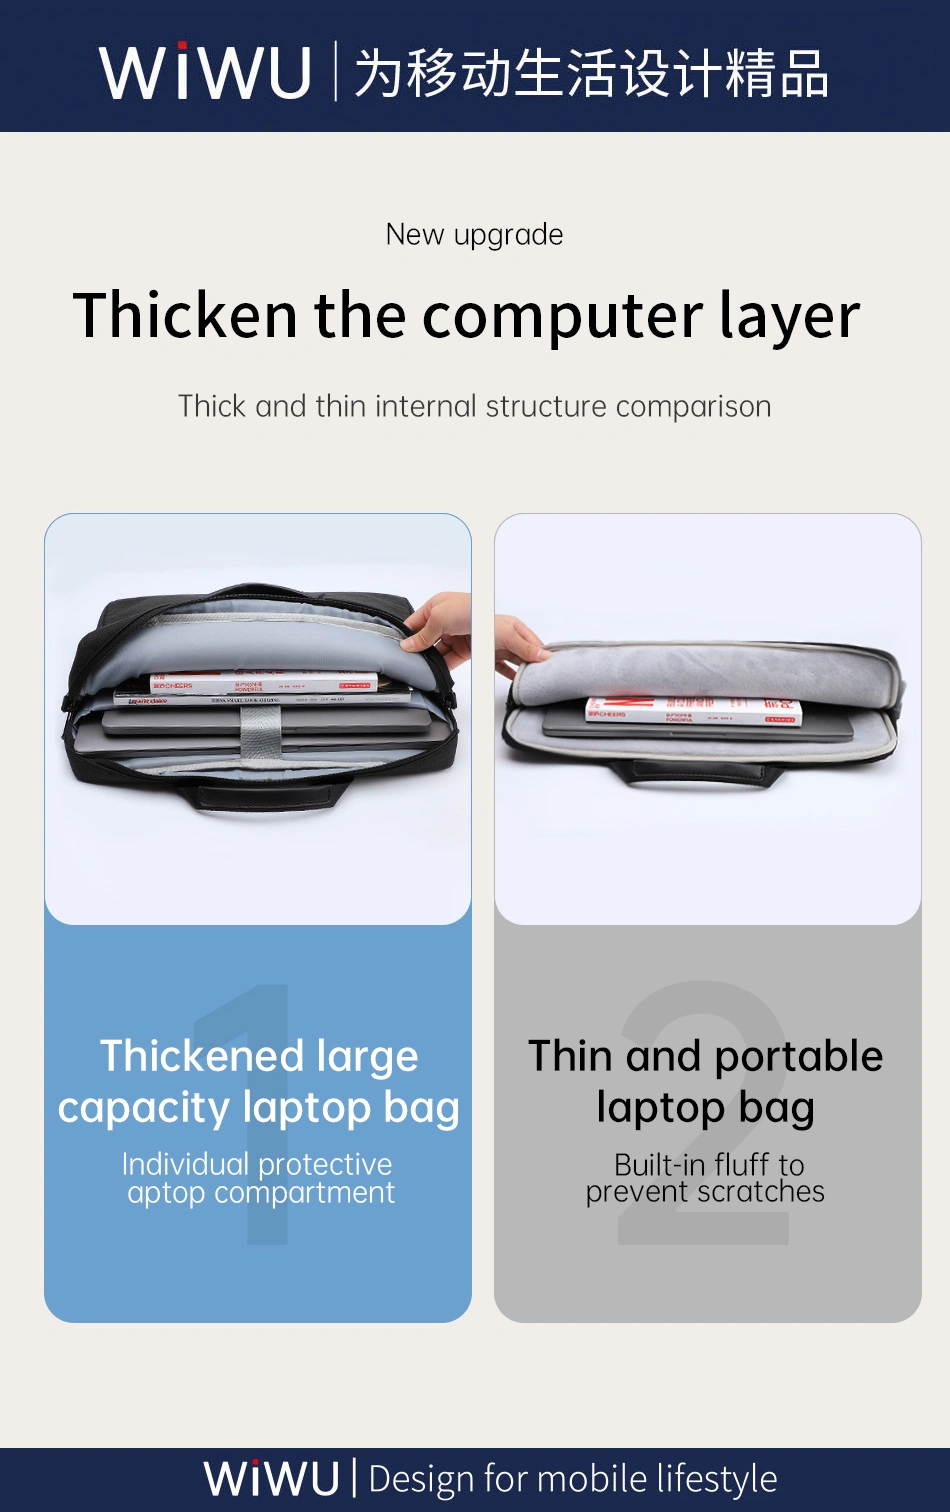 Minimalist Laptop bag Pro